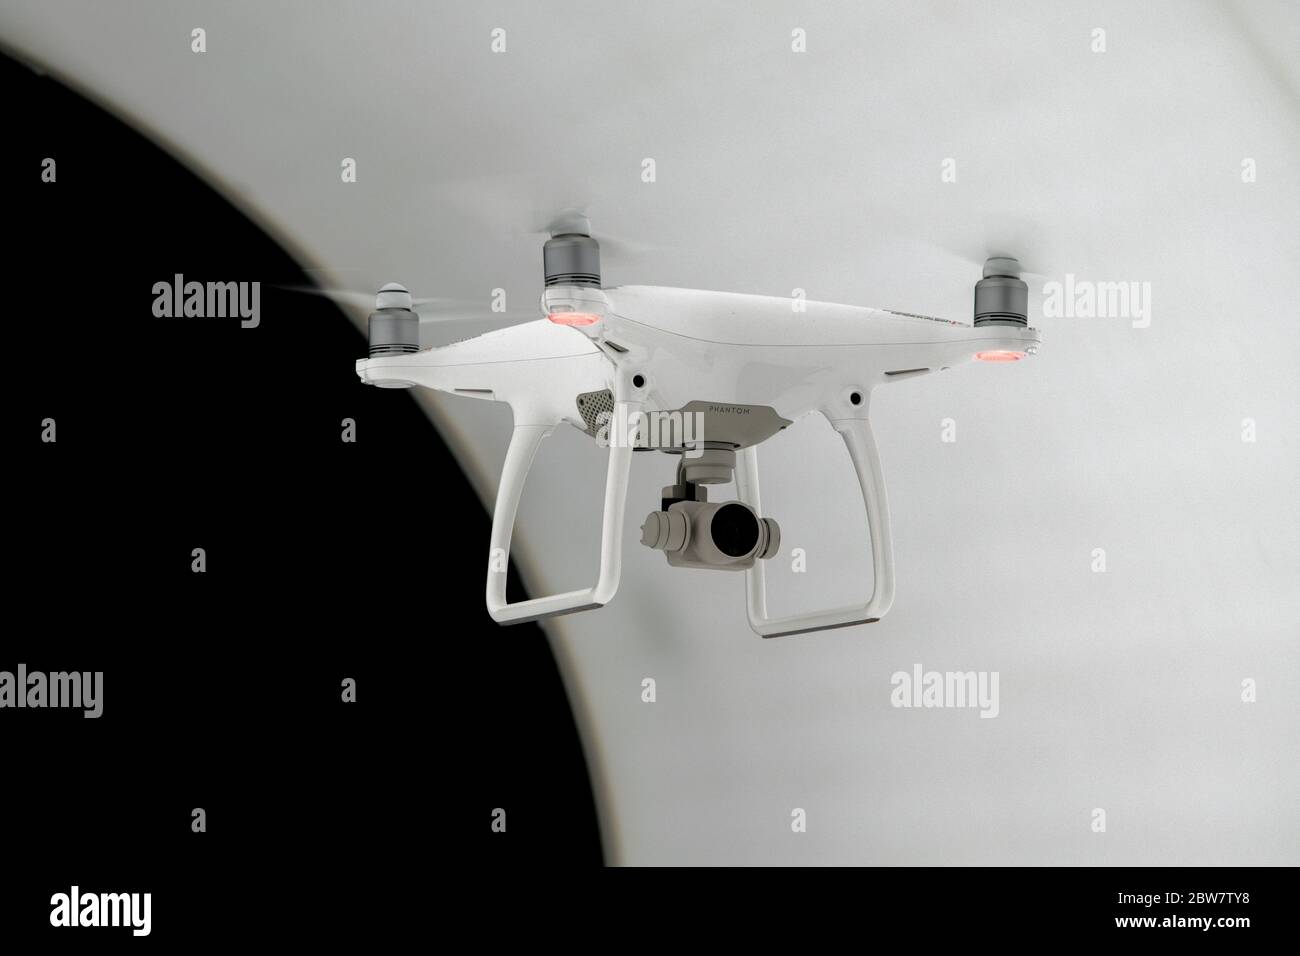 Drohne DJI Phantom 4 mit integrierter, Gimbal-gelagerter Kamera fliegt Nachts in der Luft - Flugdrohne Stock Photo